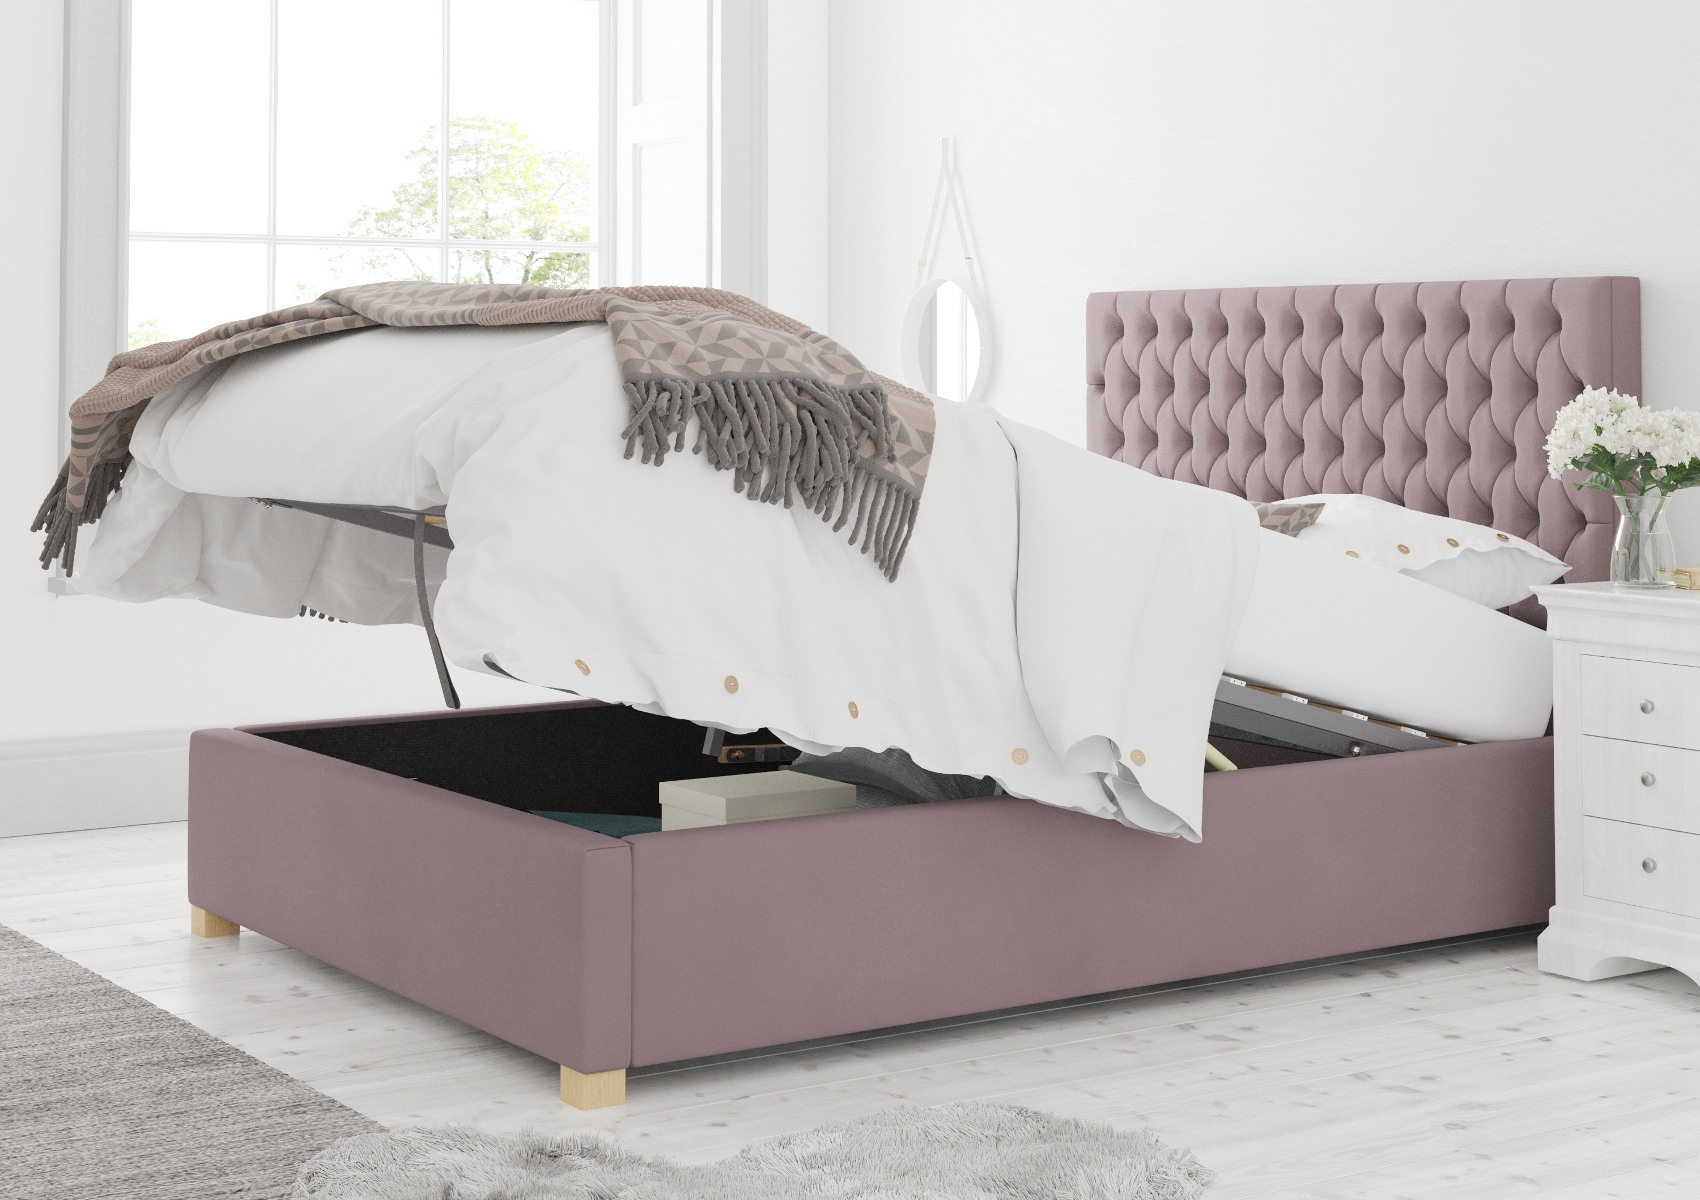 View Malton Blush Upholstered Single Ottoman Bed Time4Sleep information